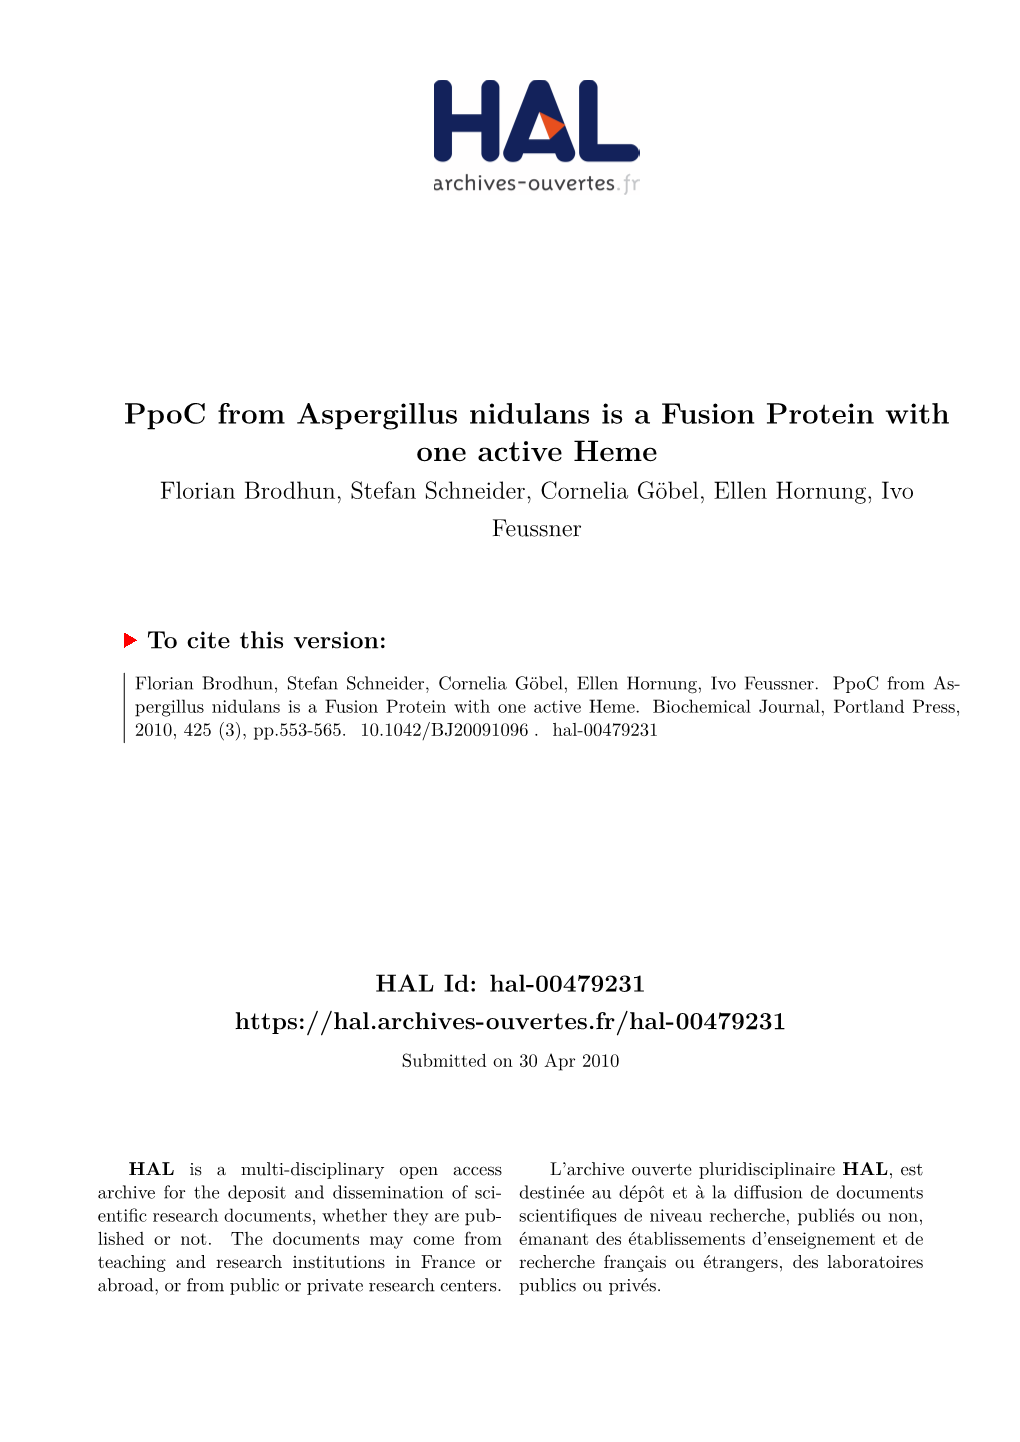 Ppoc from Aspergillus Nidulans Is a Fusion Protein with One Active Heme Florian Brodhun, Stefan Schneider, Cornelia Göbel, Ellen Hornung, Ivo Feussner